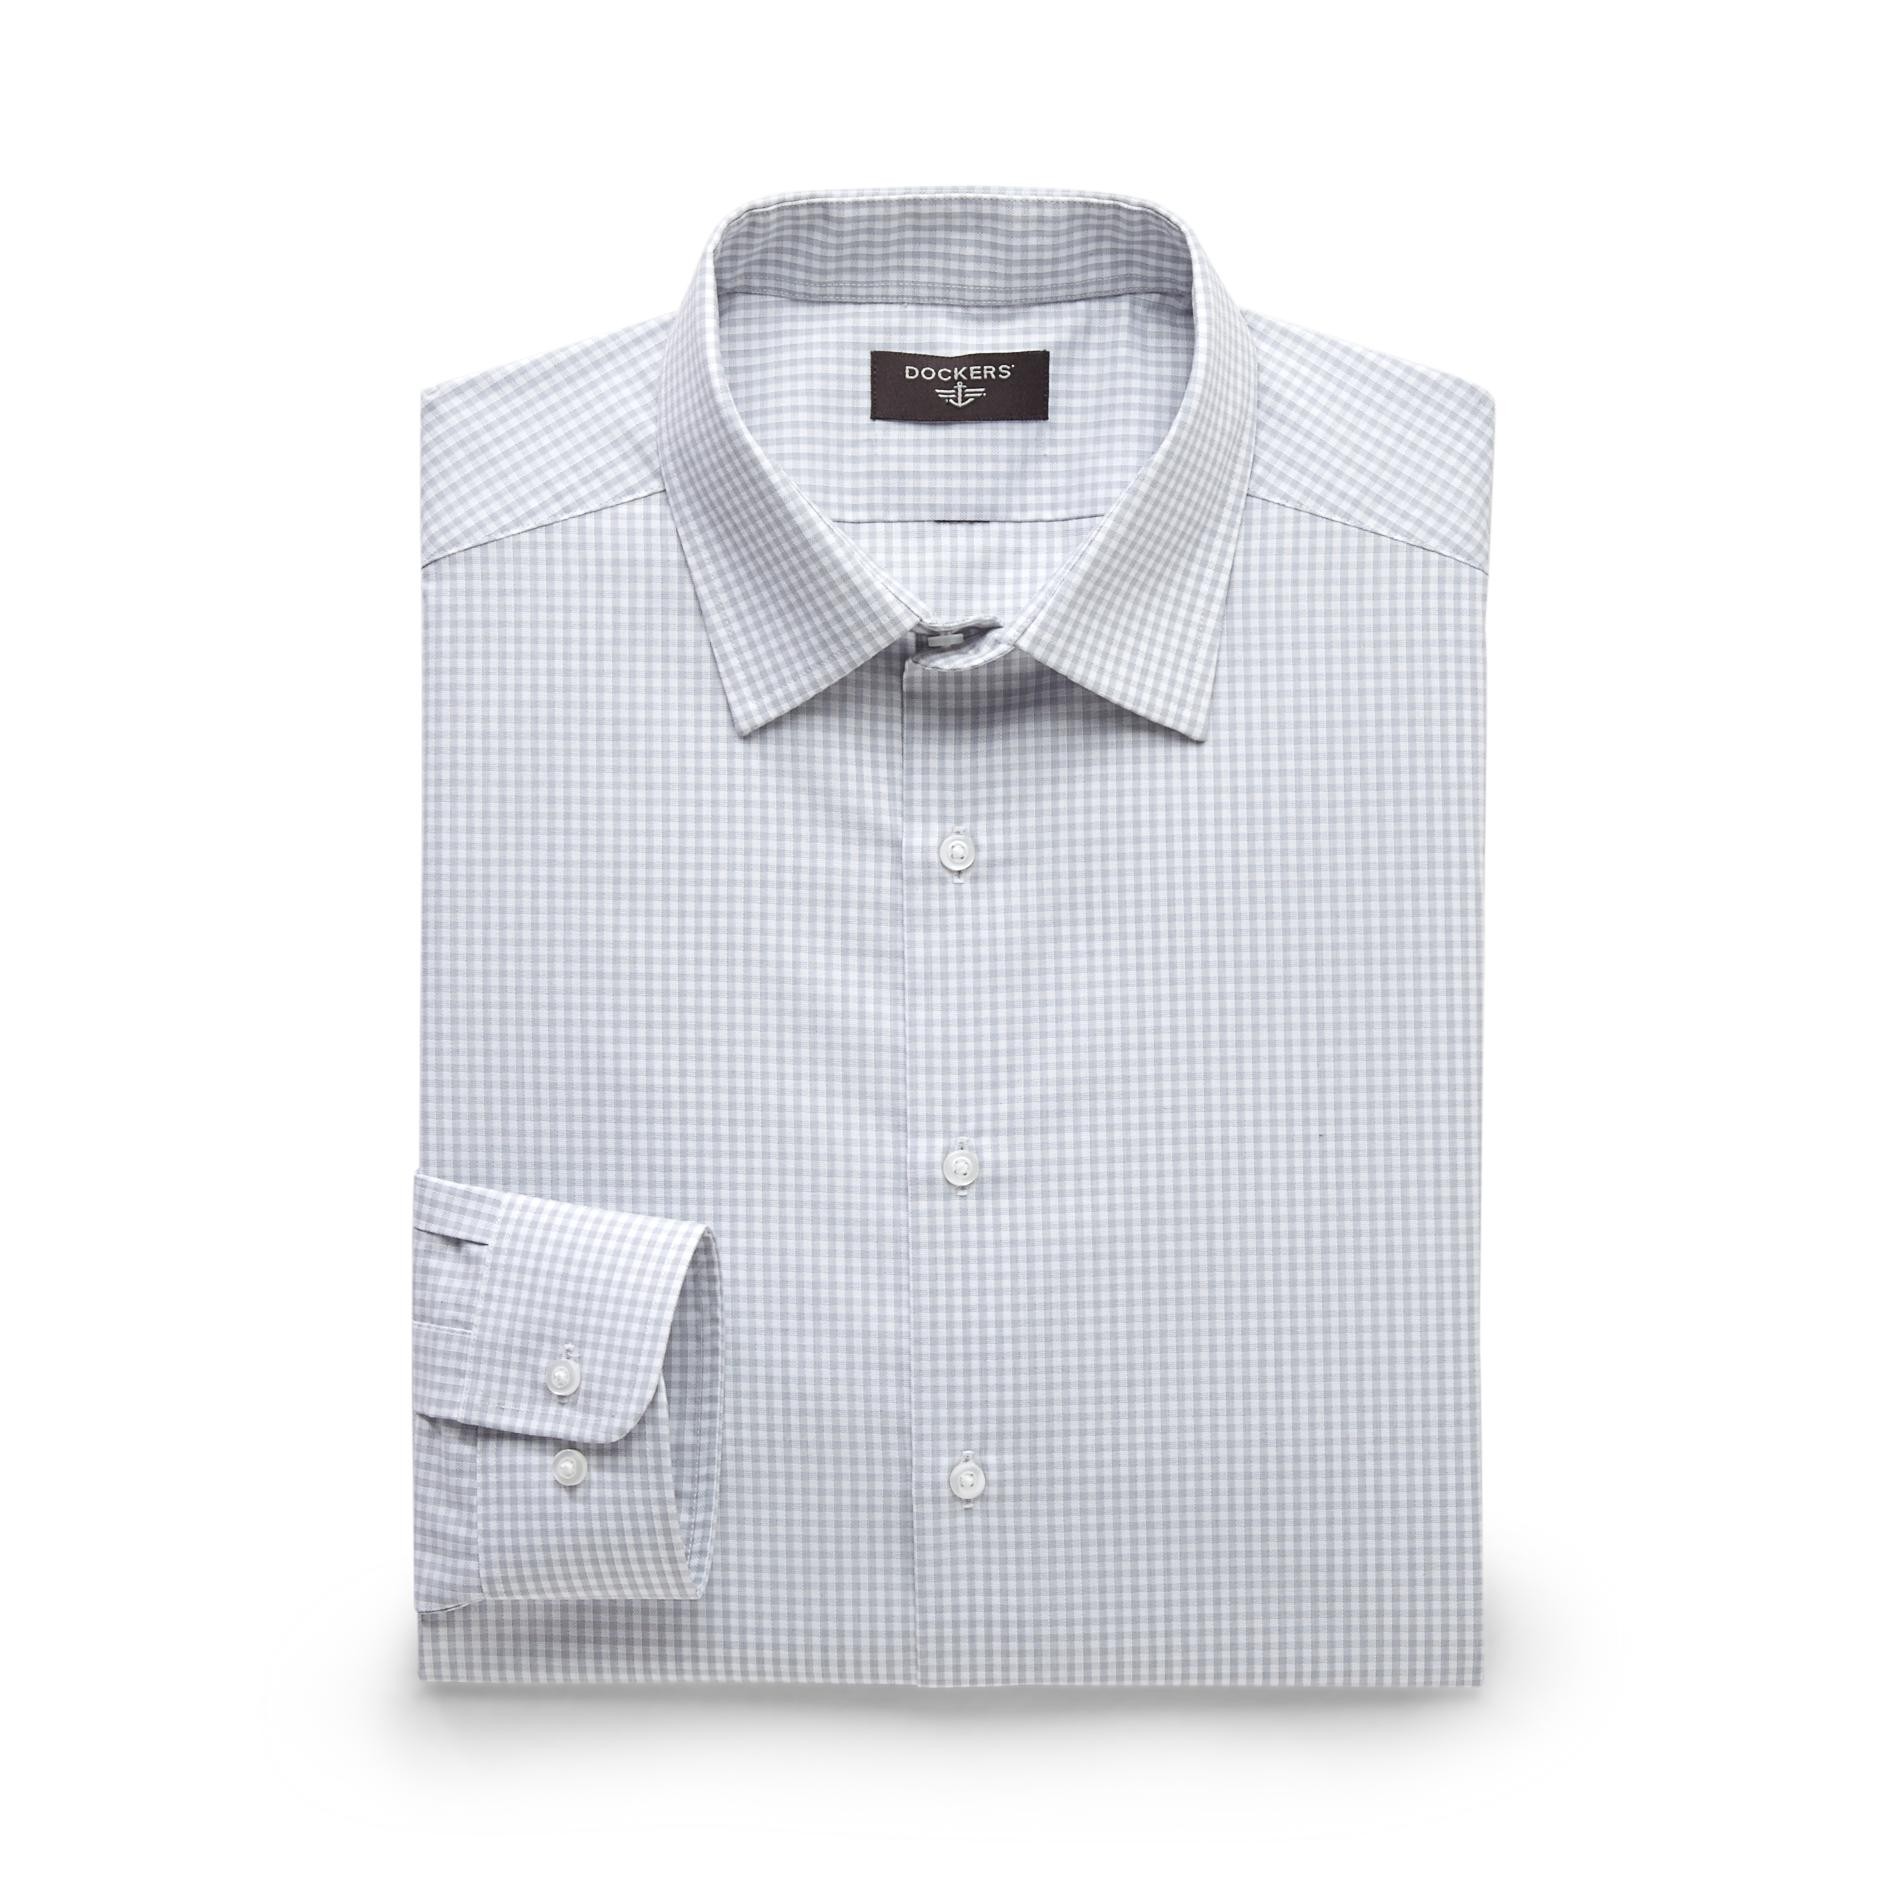 Dockers Men's Long-Sleeve Fitted Dress Shirt - Checkered